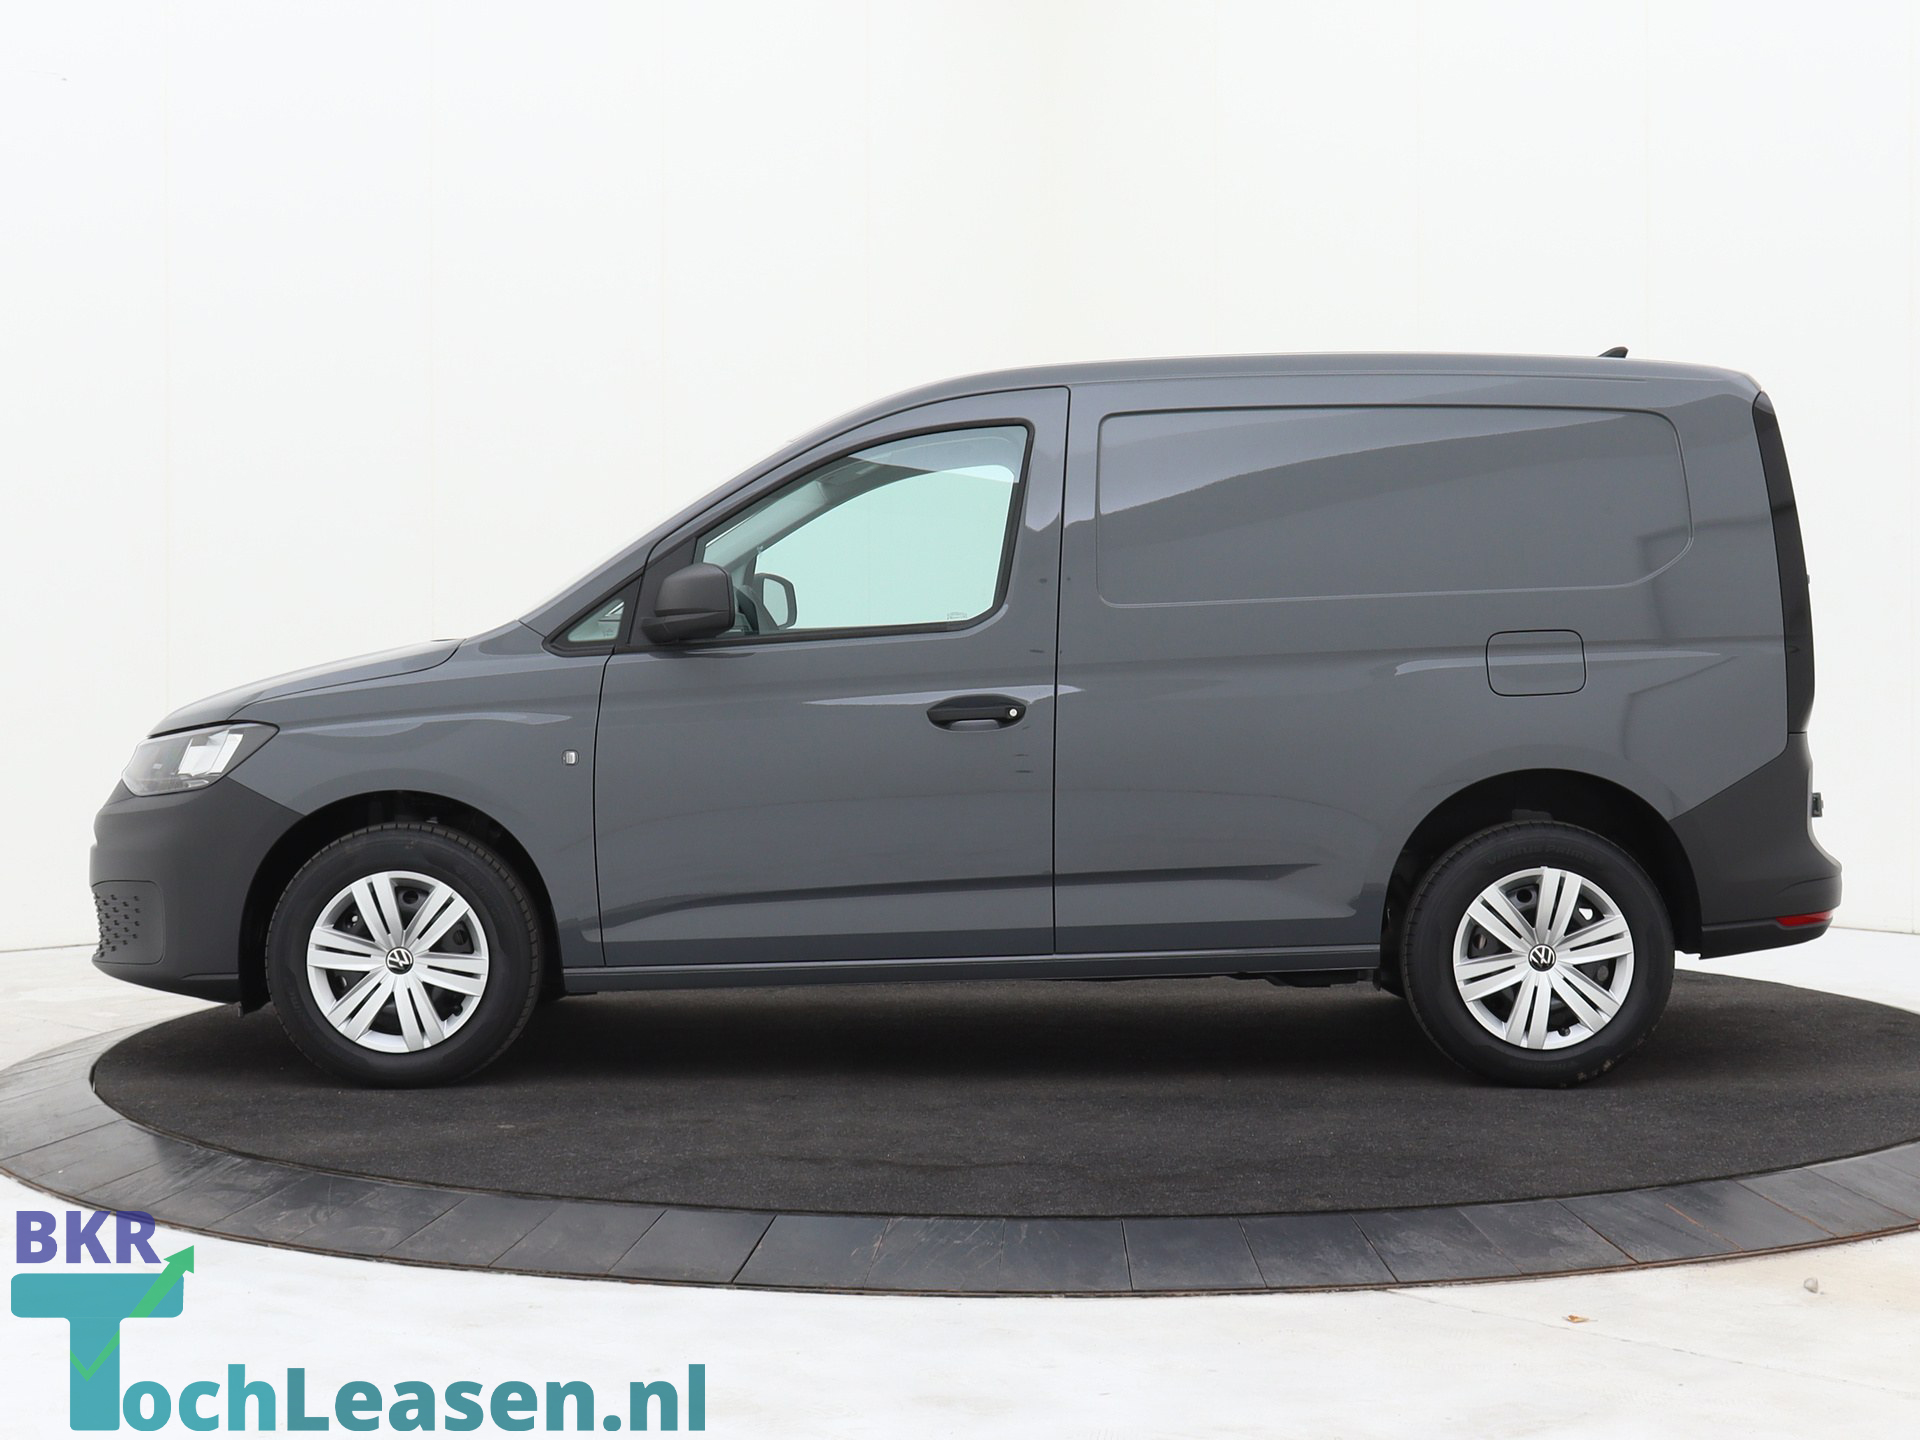 BKR toch leasen - Volkswagen Caddy - Grijs 6